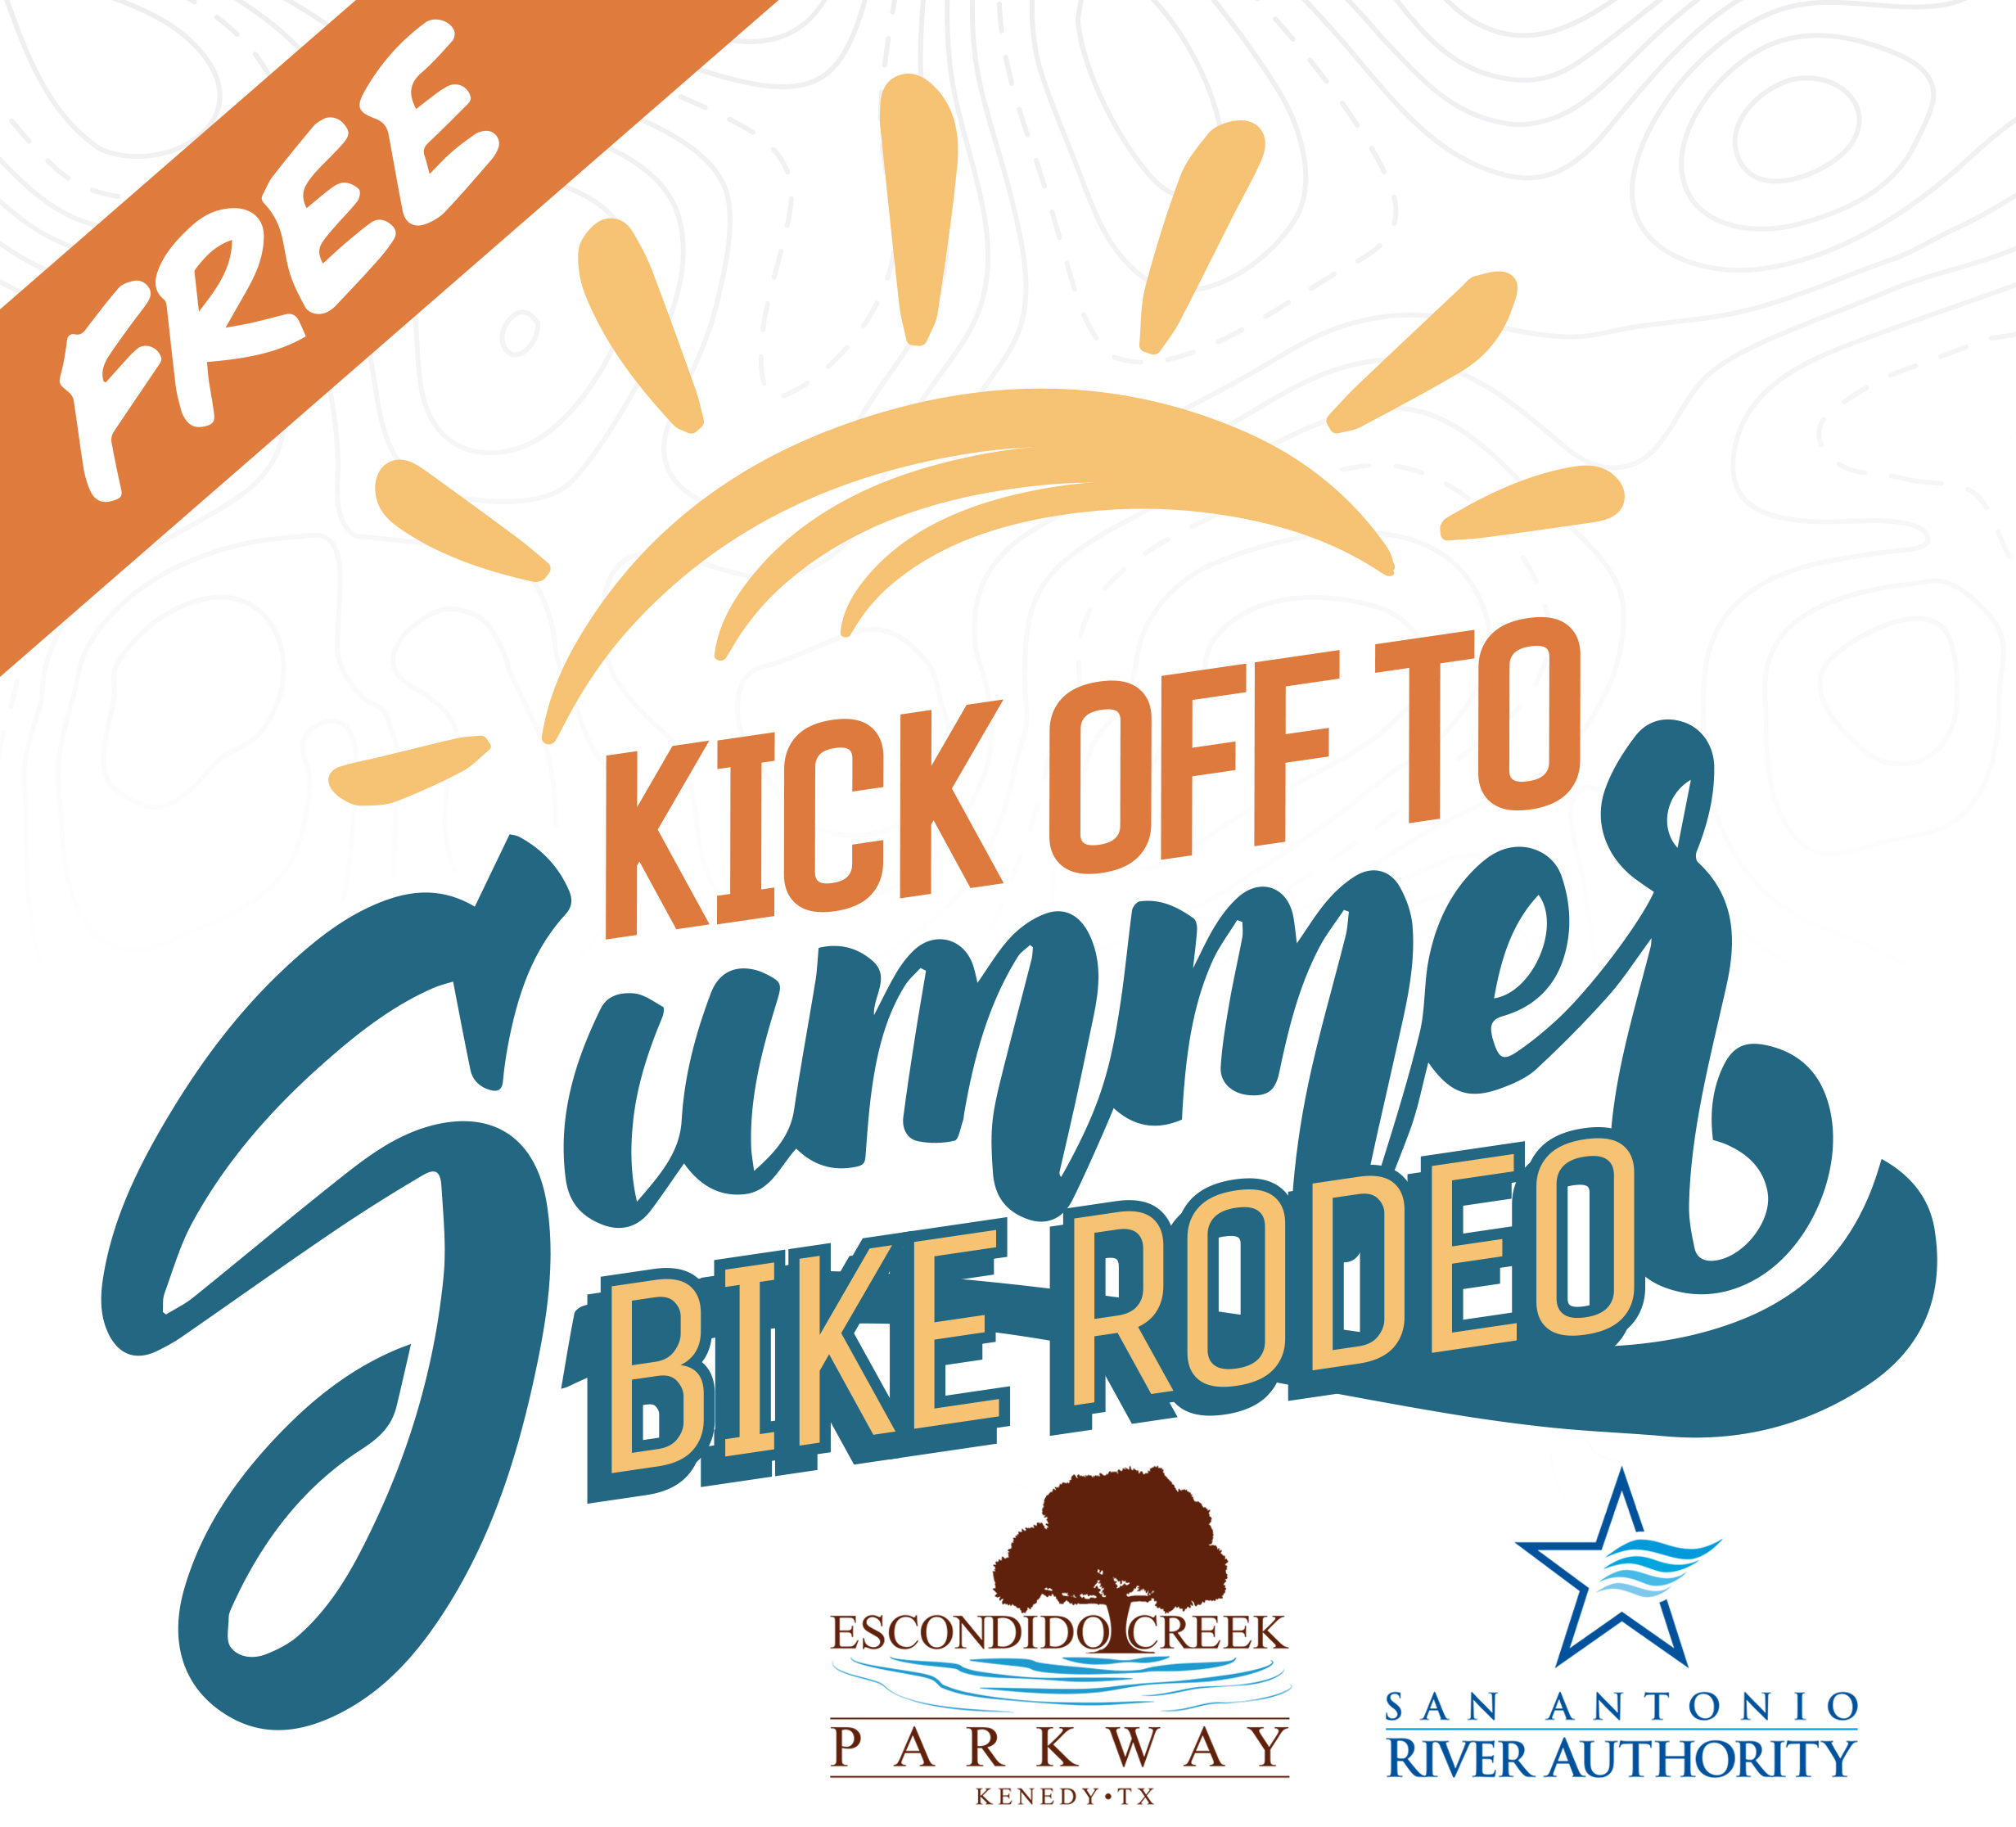 Kick off to summer Bike rodeo